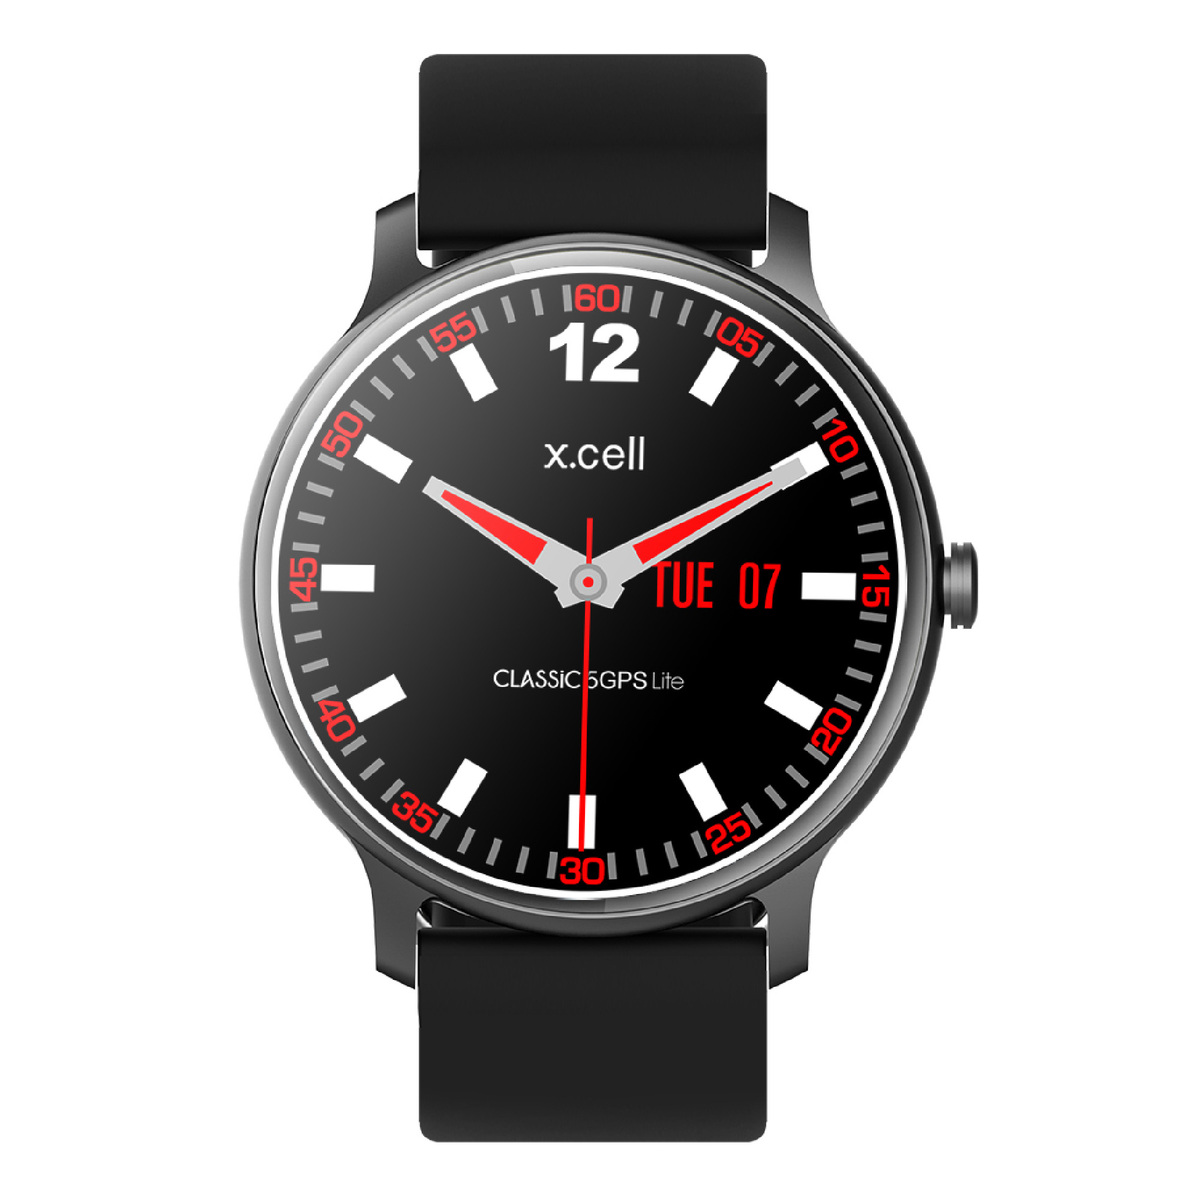 Xcell Classic 5 Lite GPSSmart Watch Black